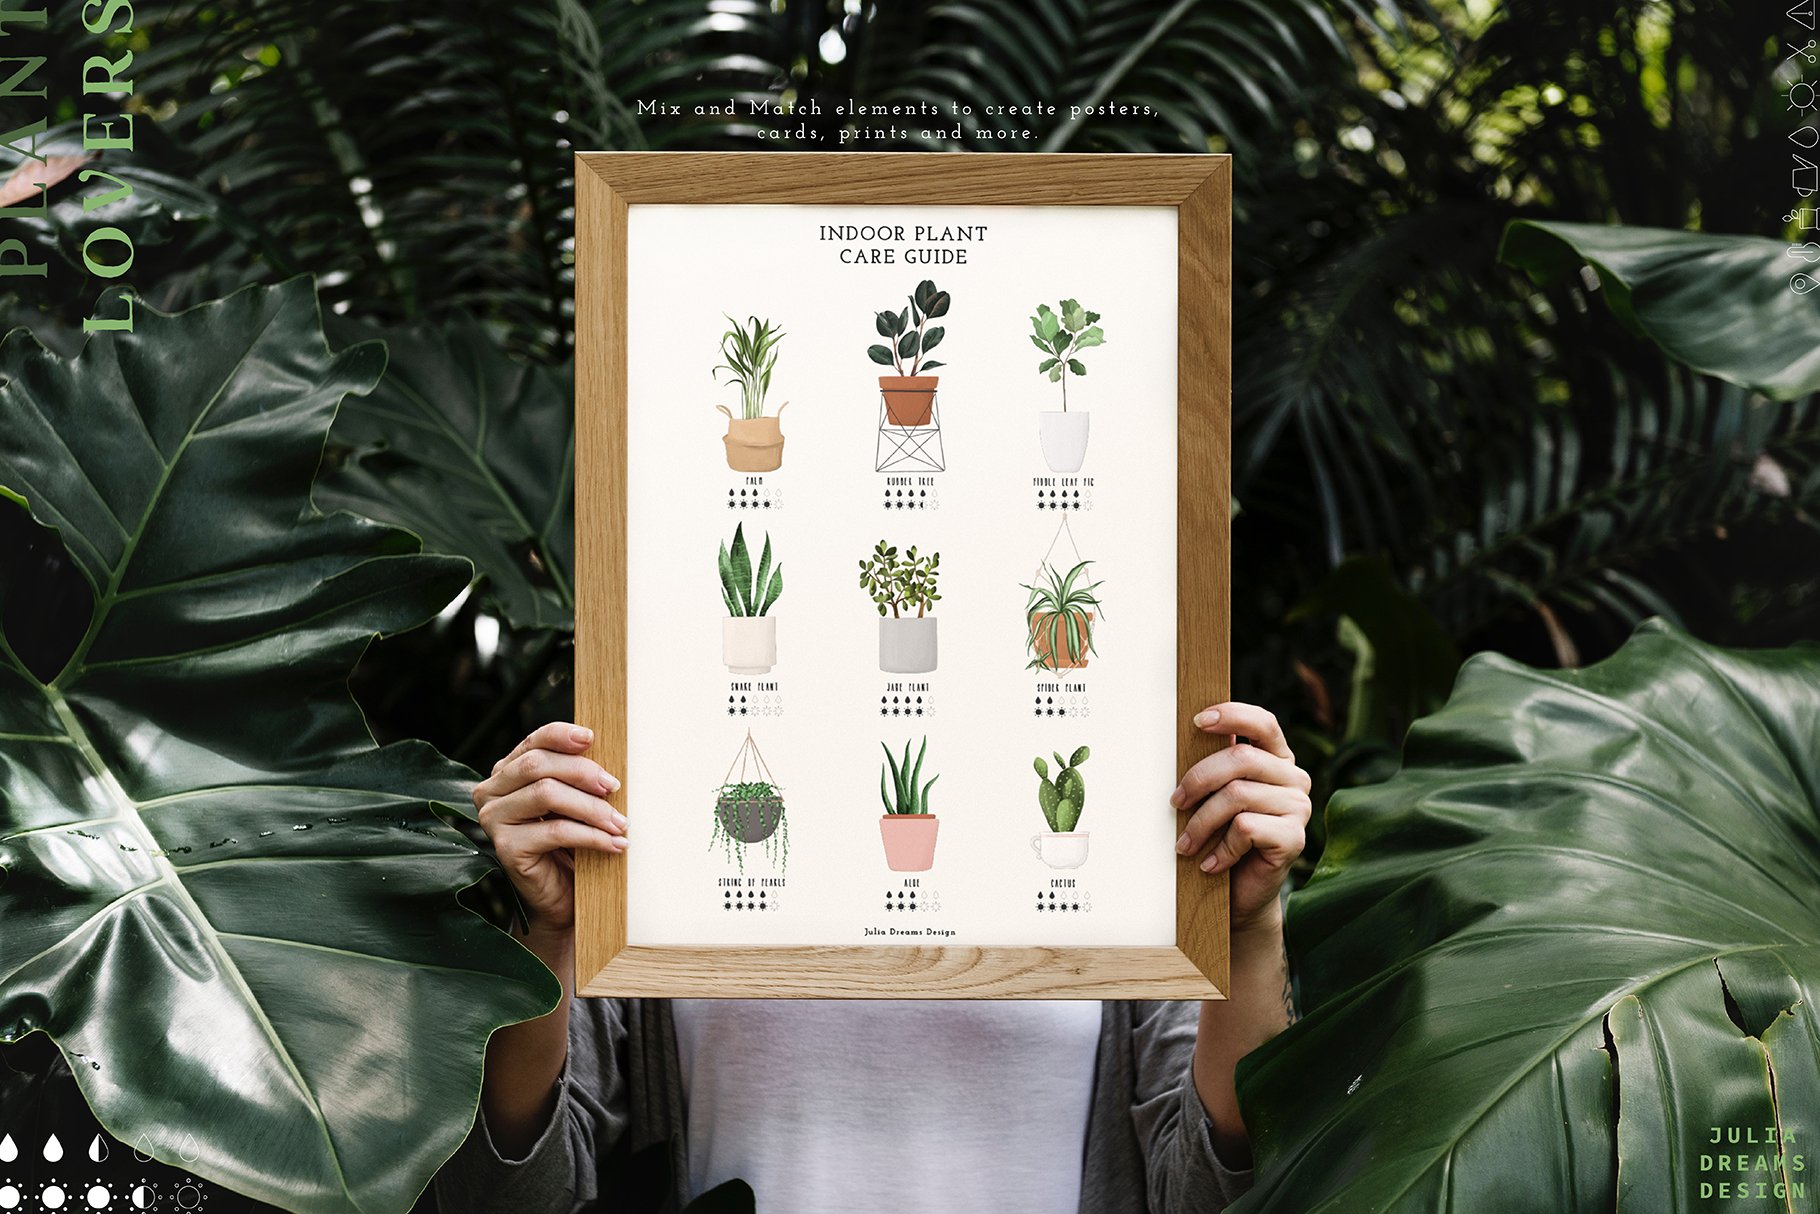 Interesting poster for plants lovers.